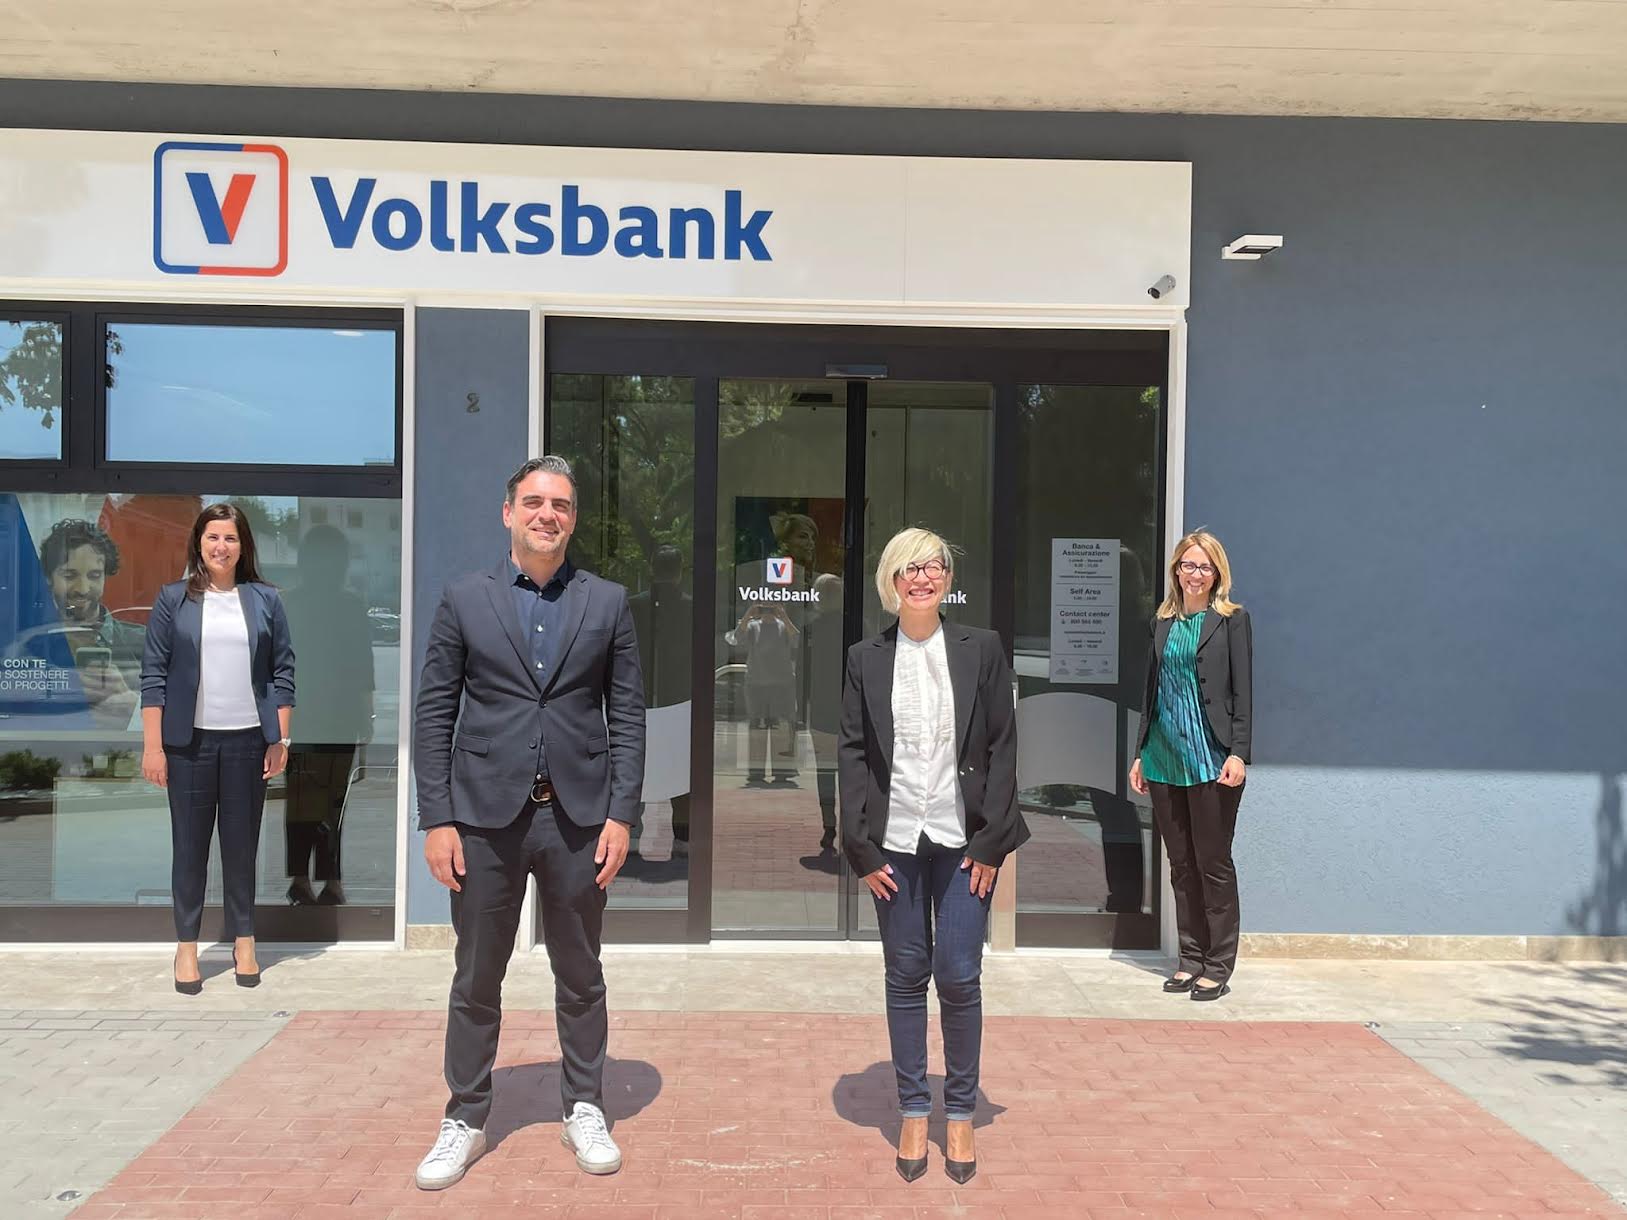 vicenza banca volksbank